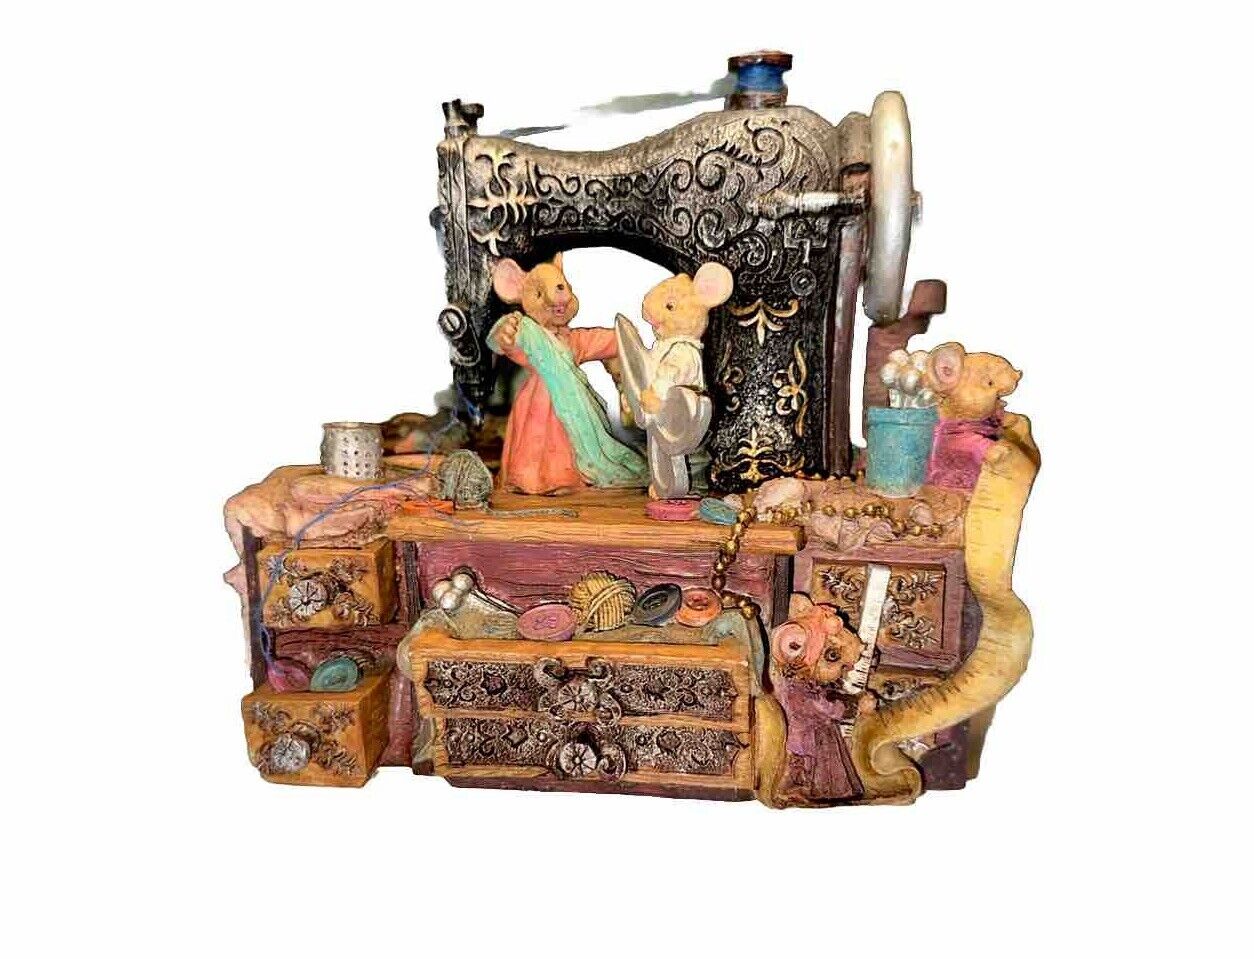 Classic Treasures Music Box Sewing Machine Mice. Plays “My Favorite Things”